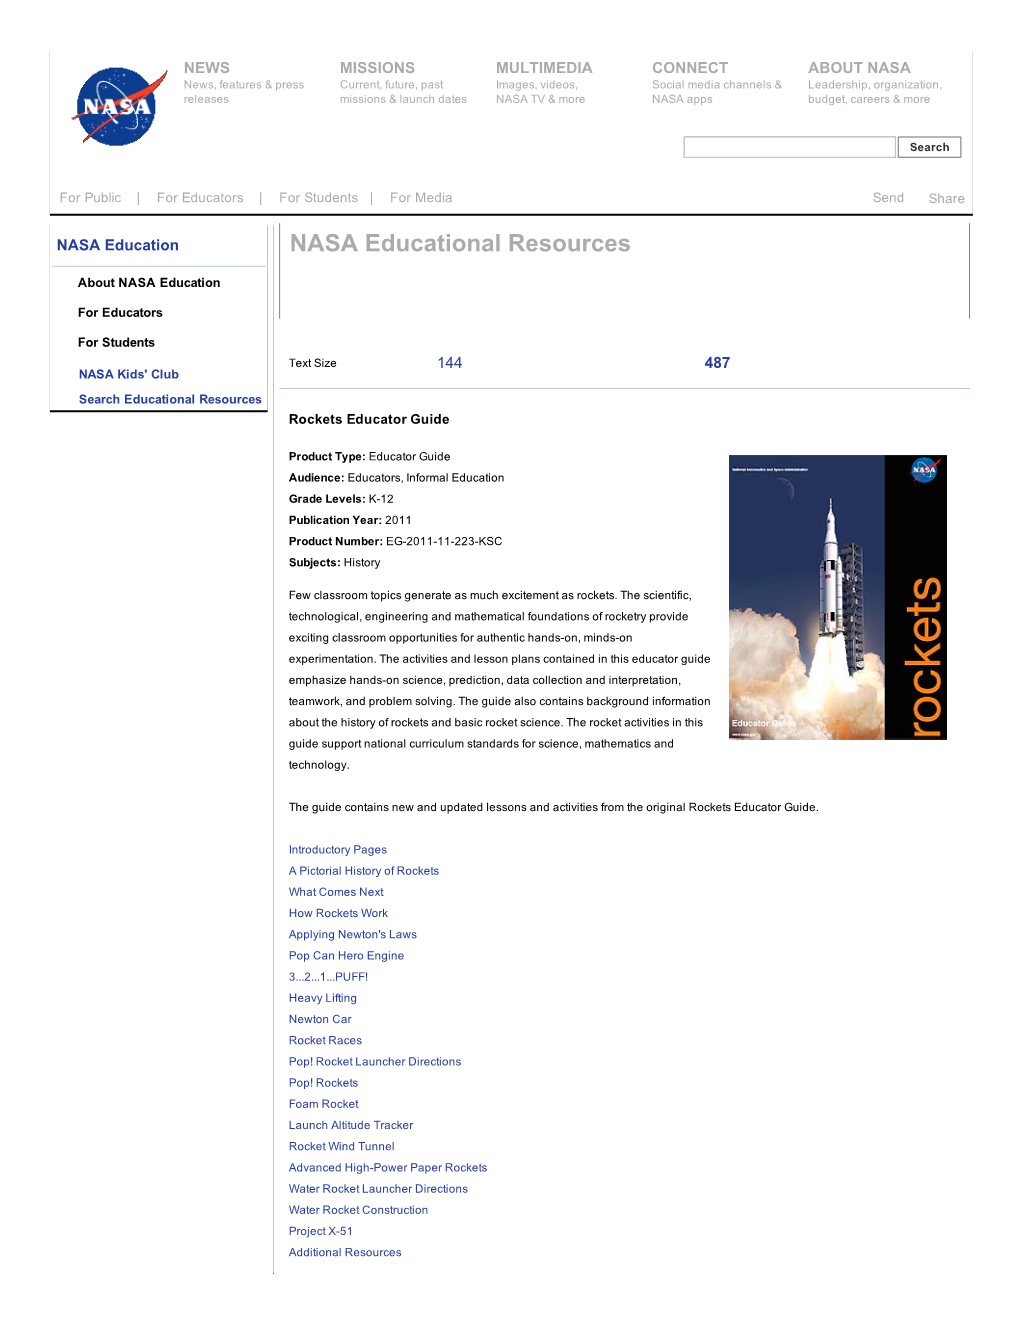 NASA Educational Resources